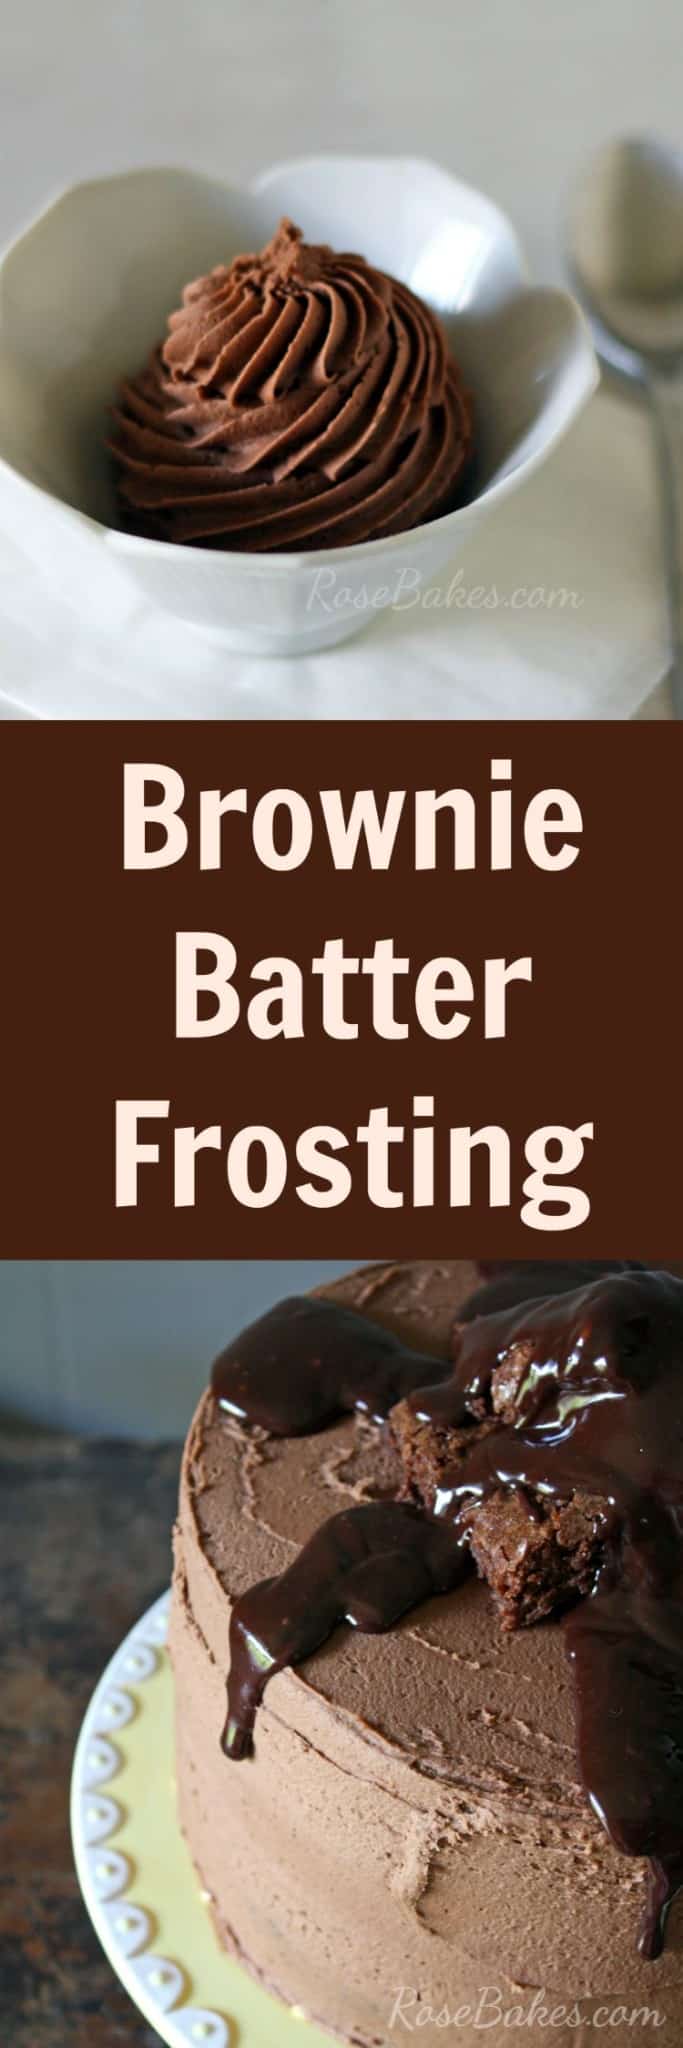 Brownie Batter Frosting